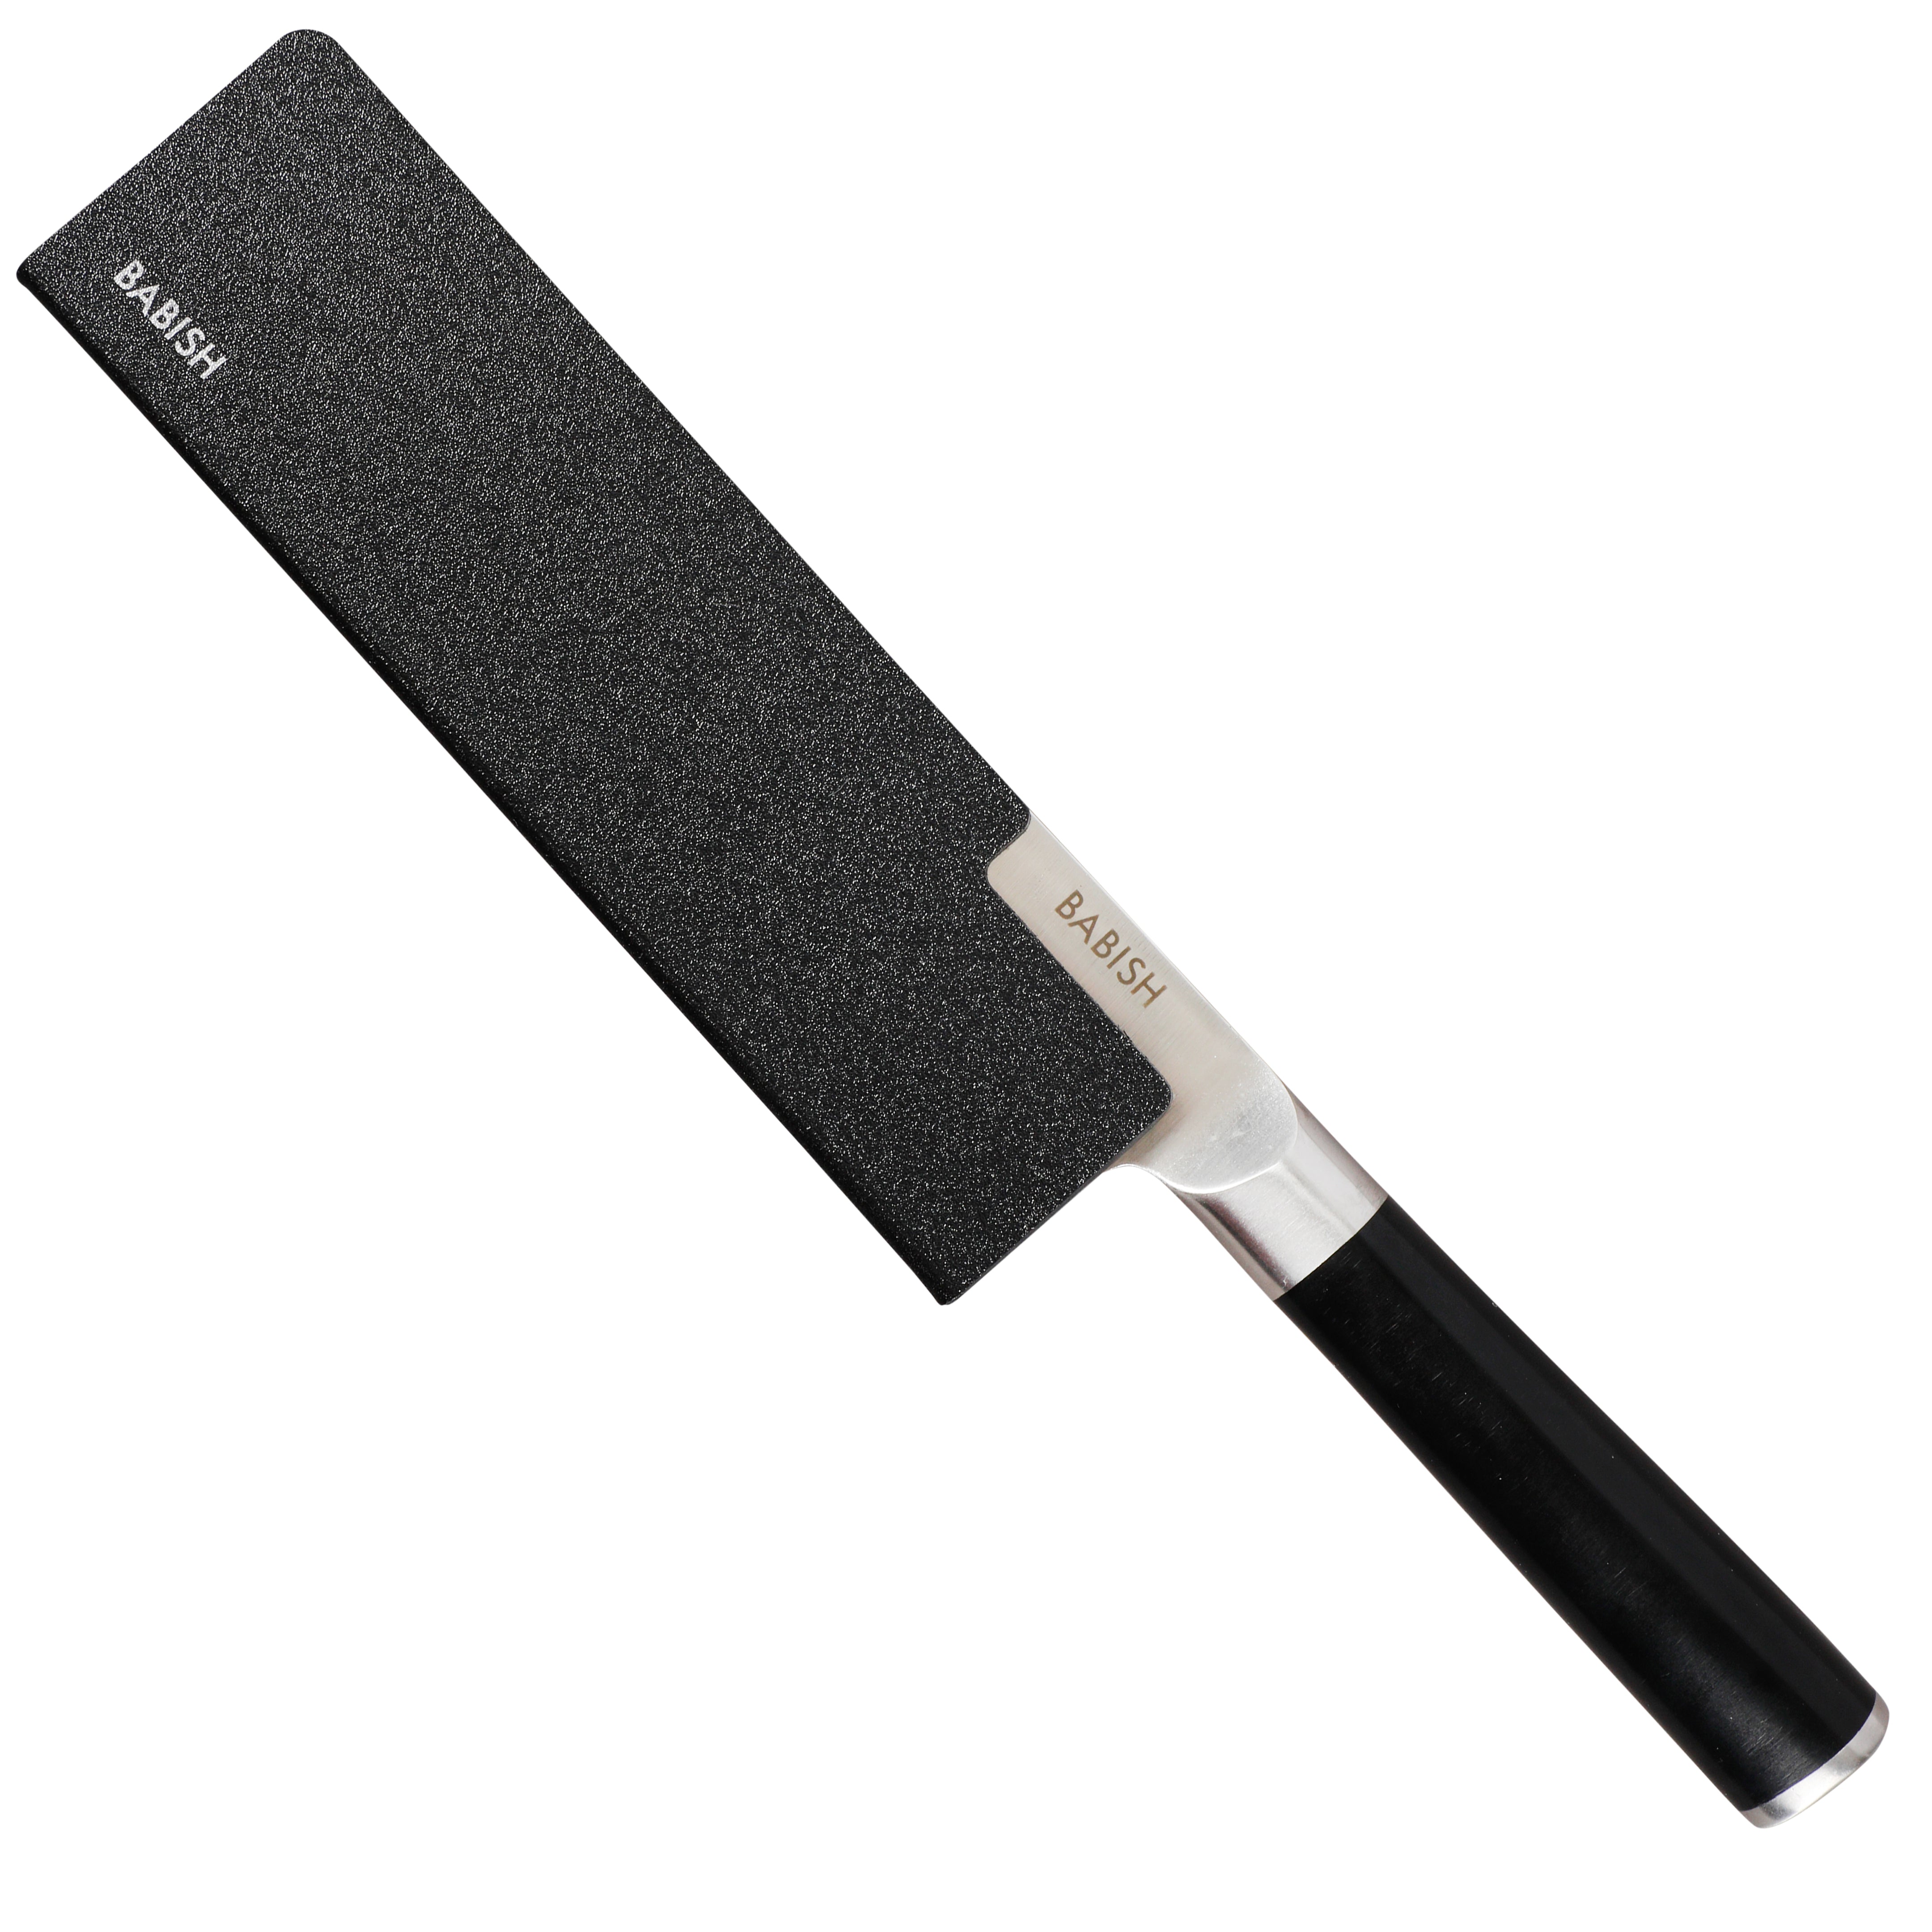 UberSchnitt Carbon Steel 10 Inch Knife Honing Rod + Knife Guard Complete Kit